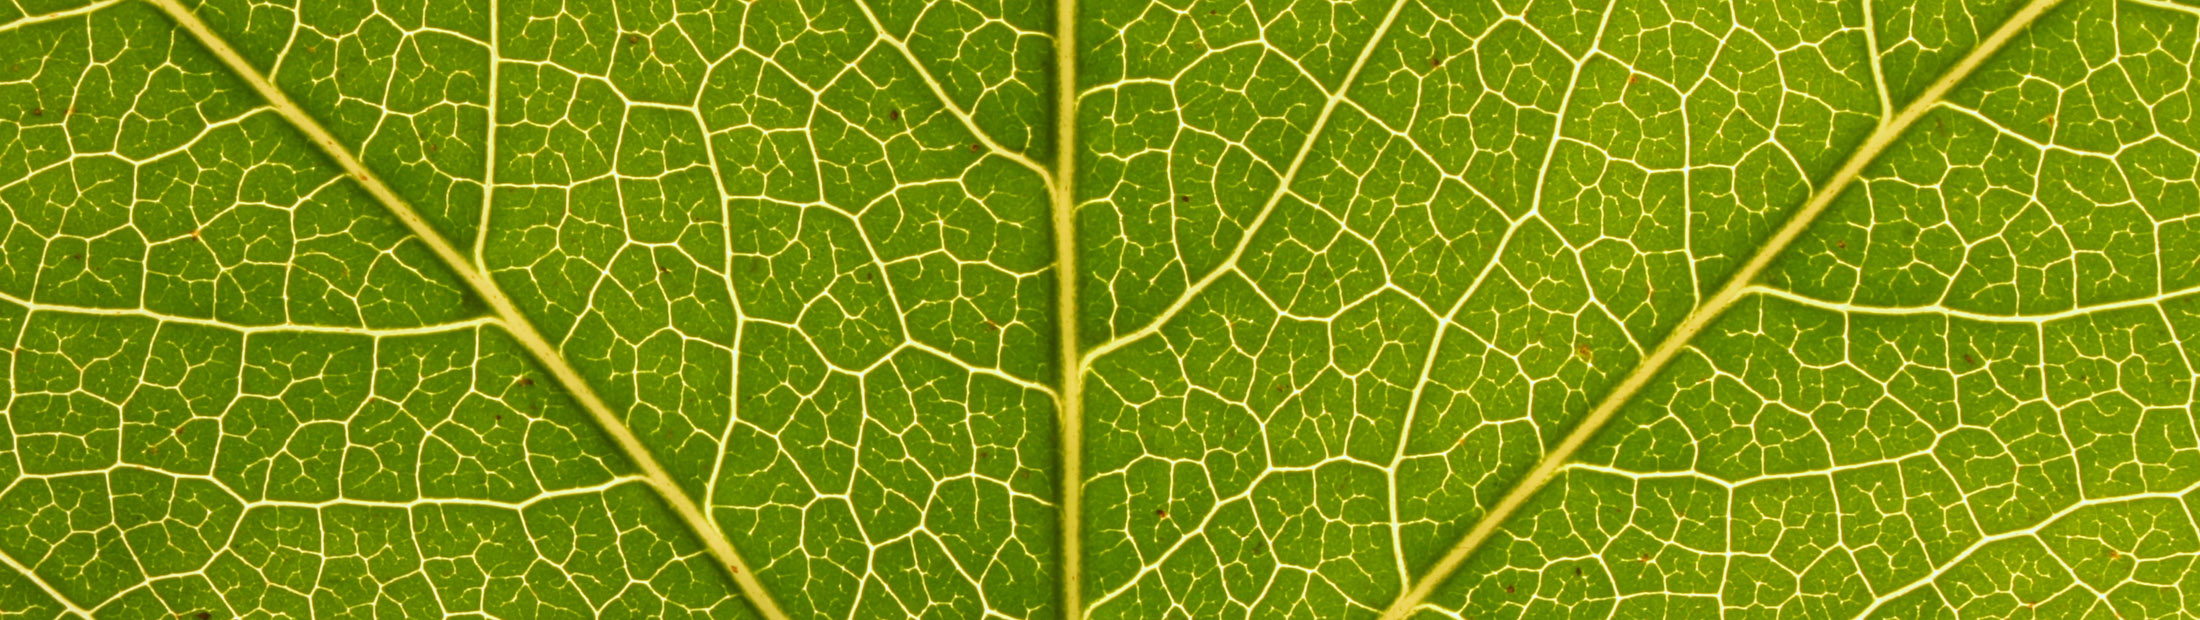 Environmental leaf fractal.